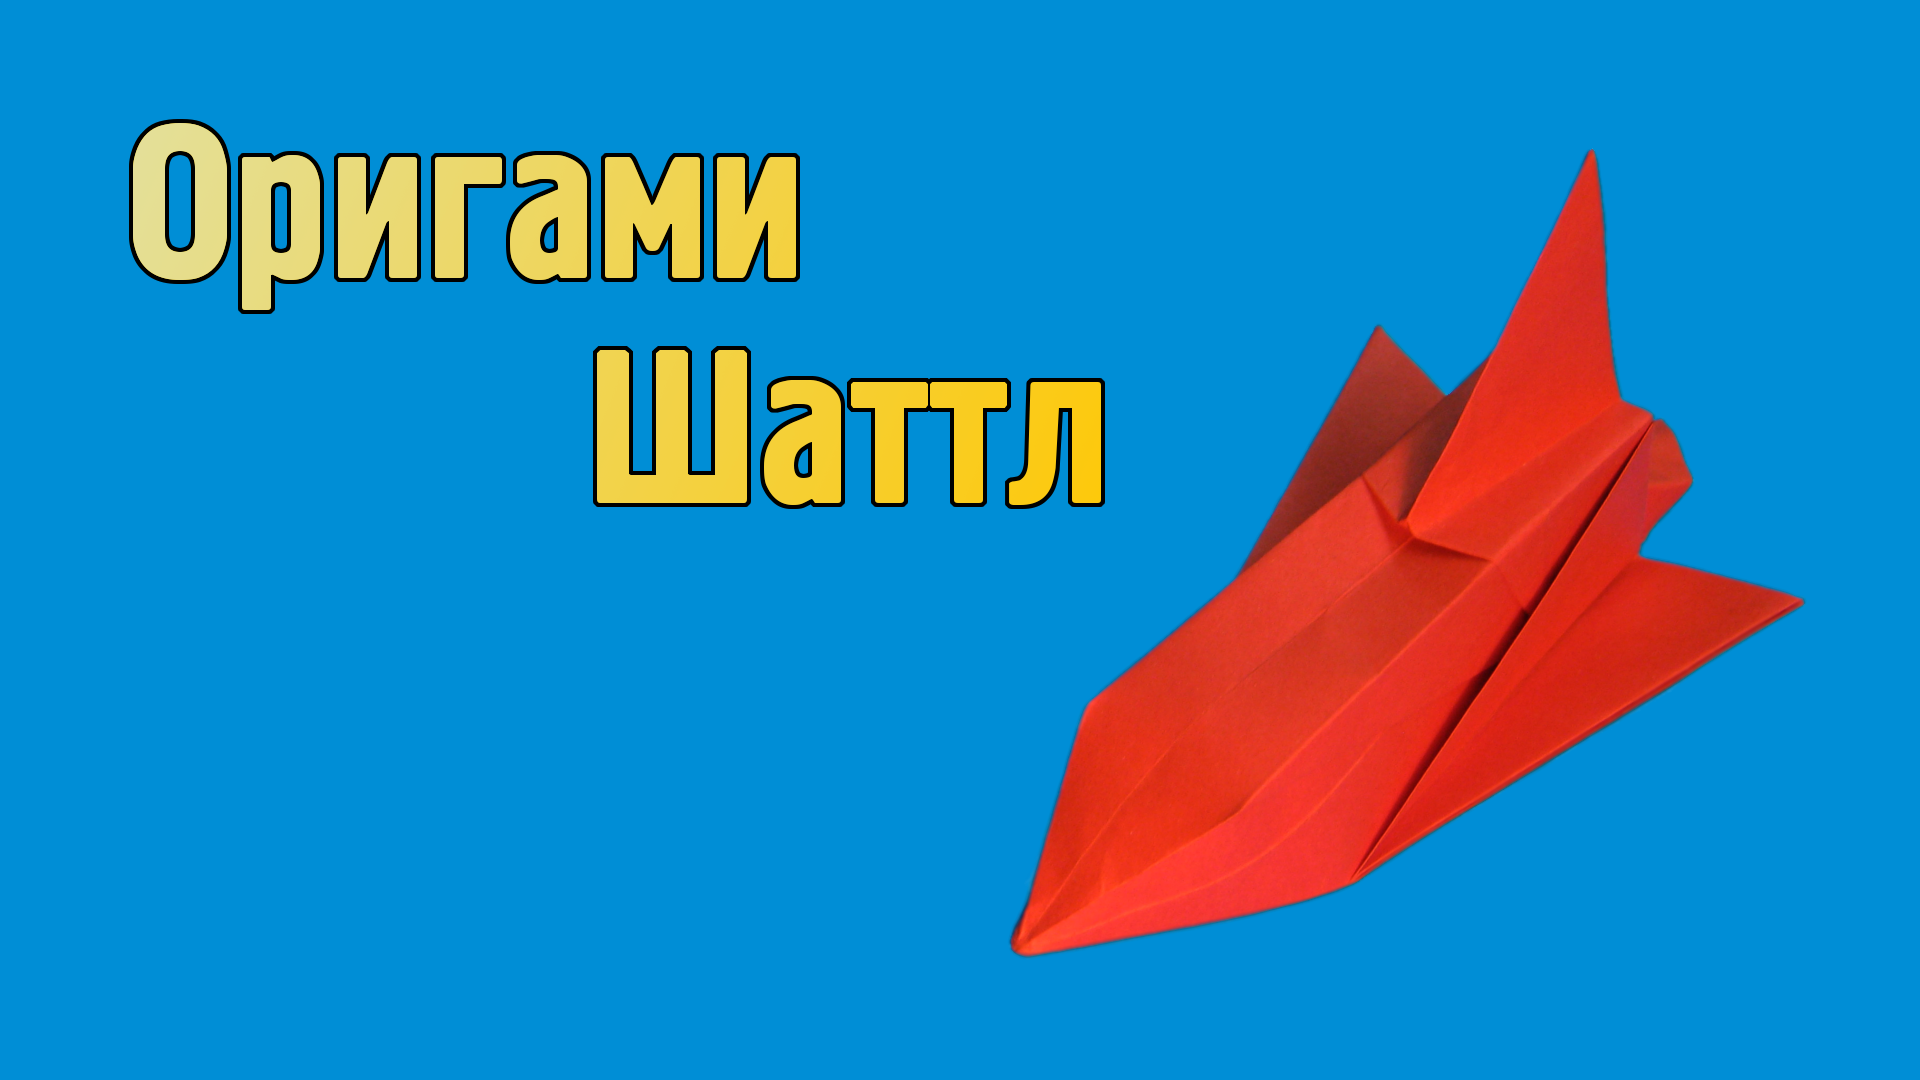 Ракета из бумаги: в технике оригами